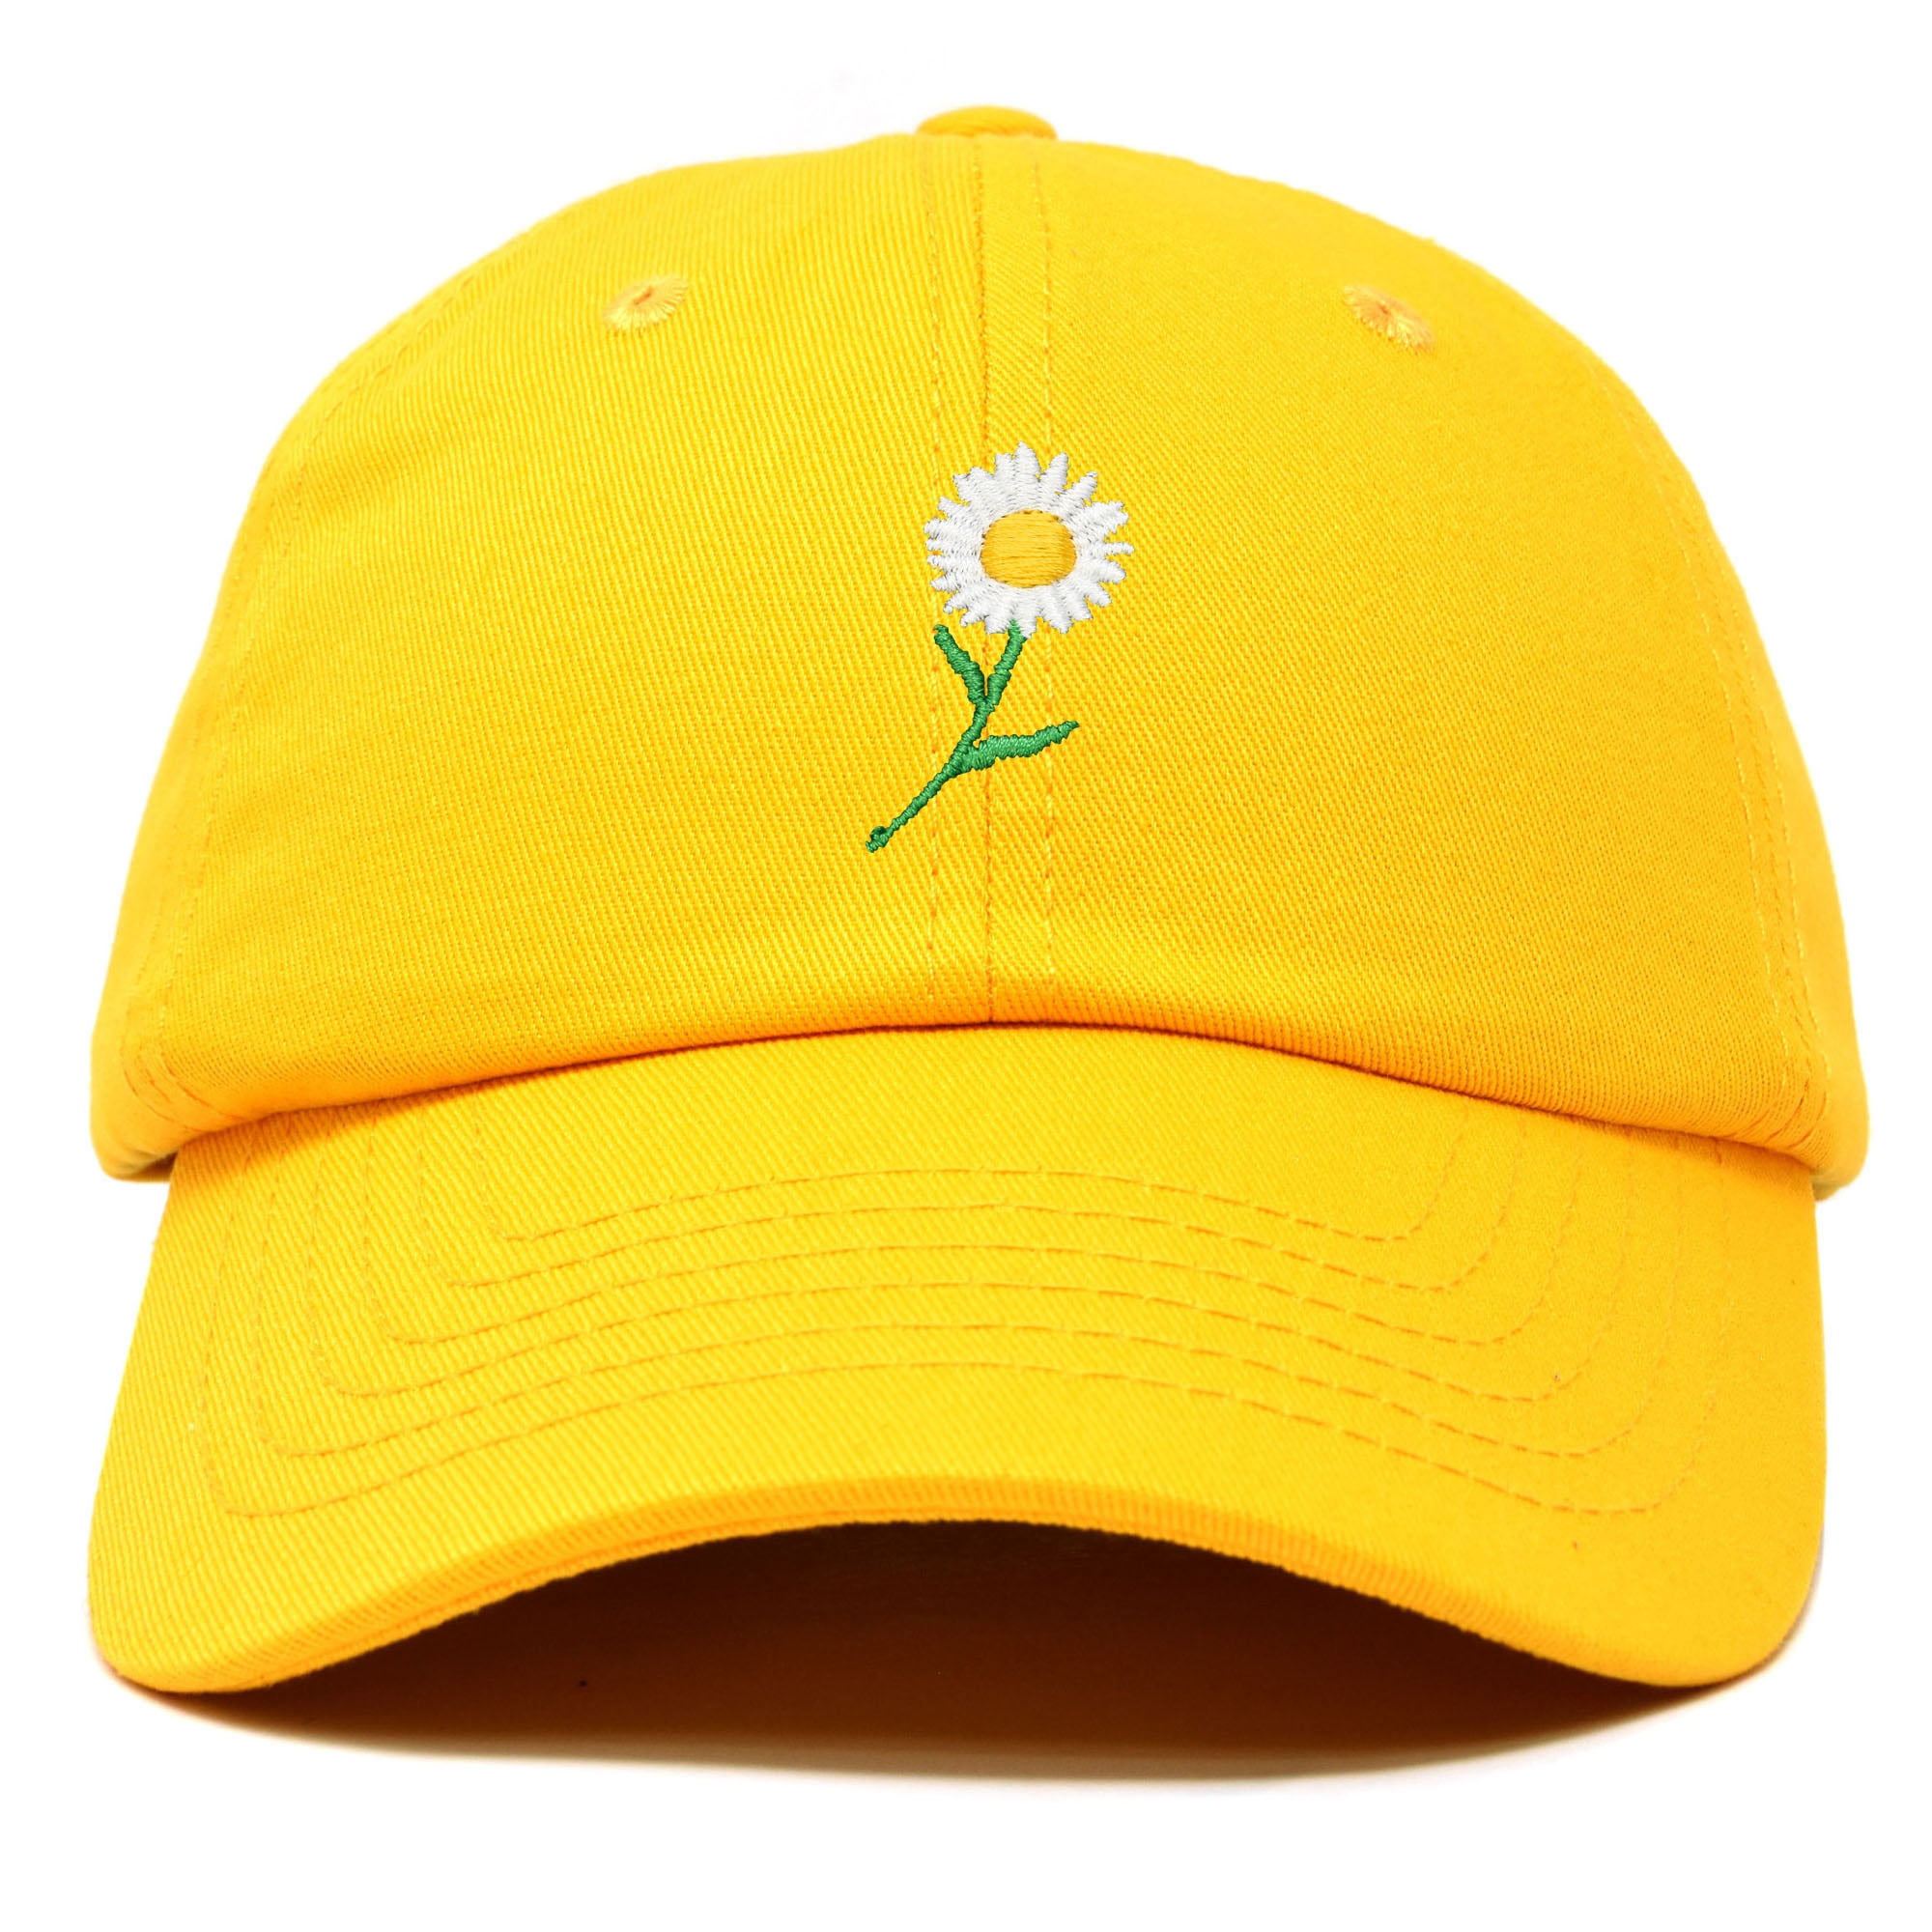 DALIX Daisy Flower Hat Womens Floral Baseball Cap in Gold - Walmart.com